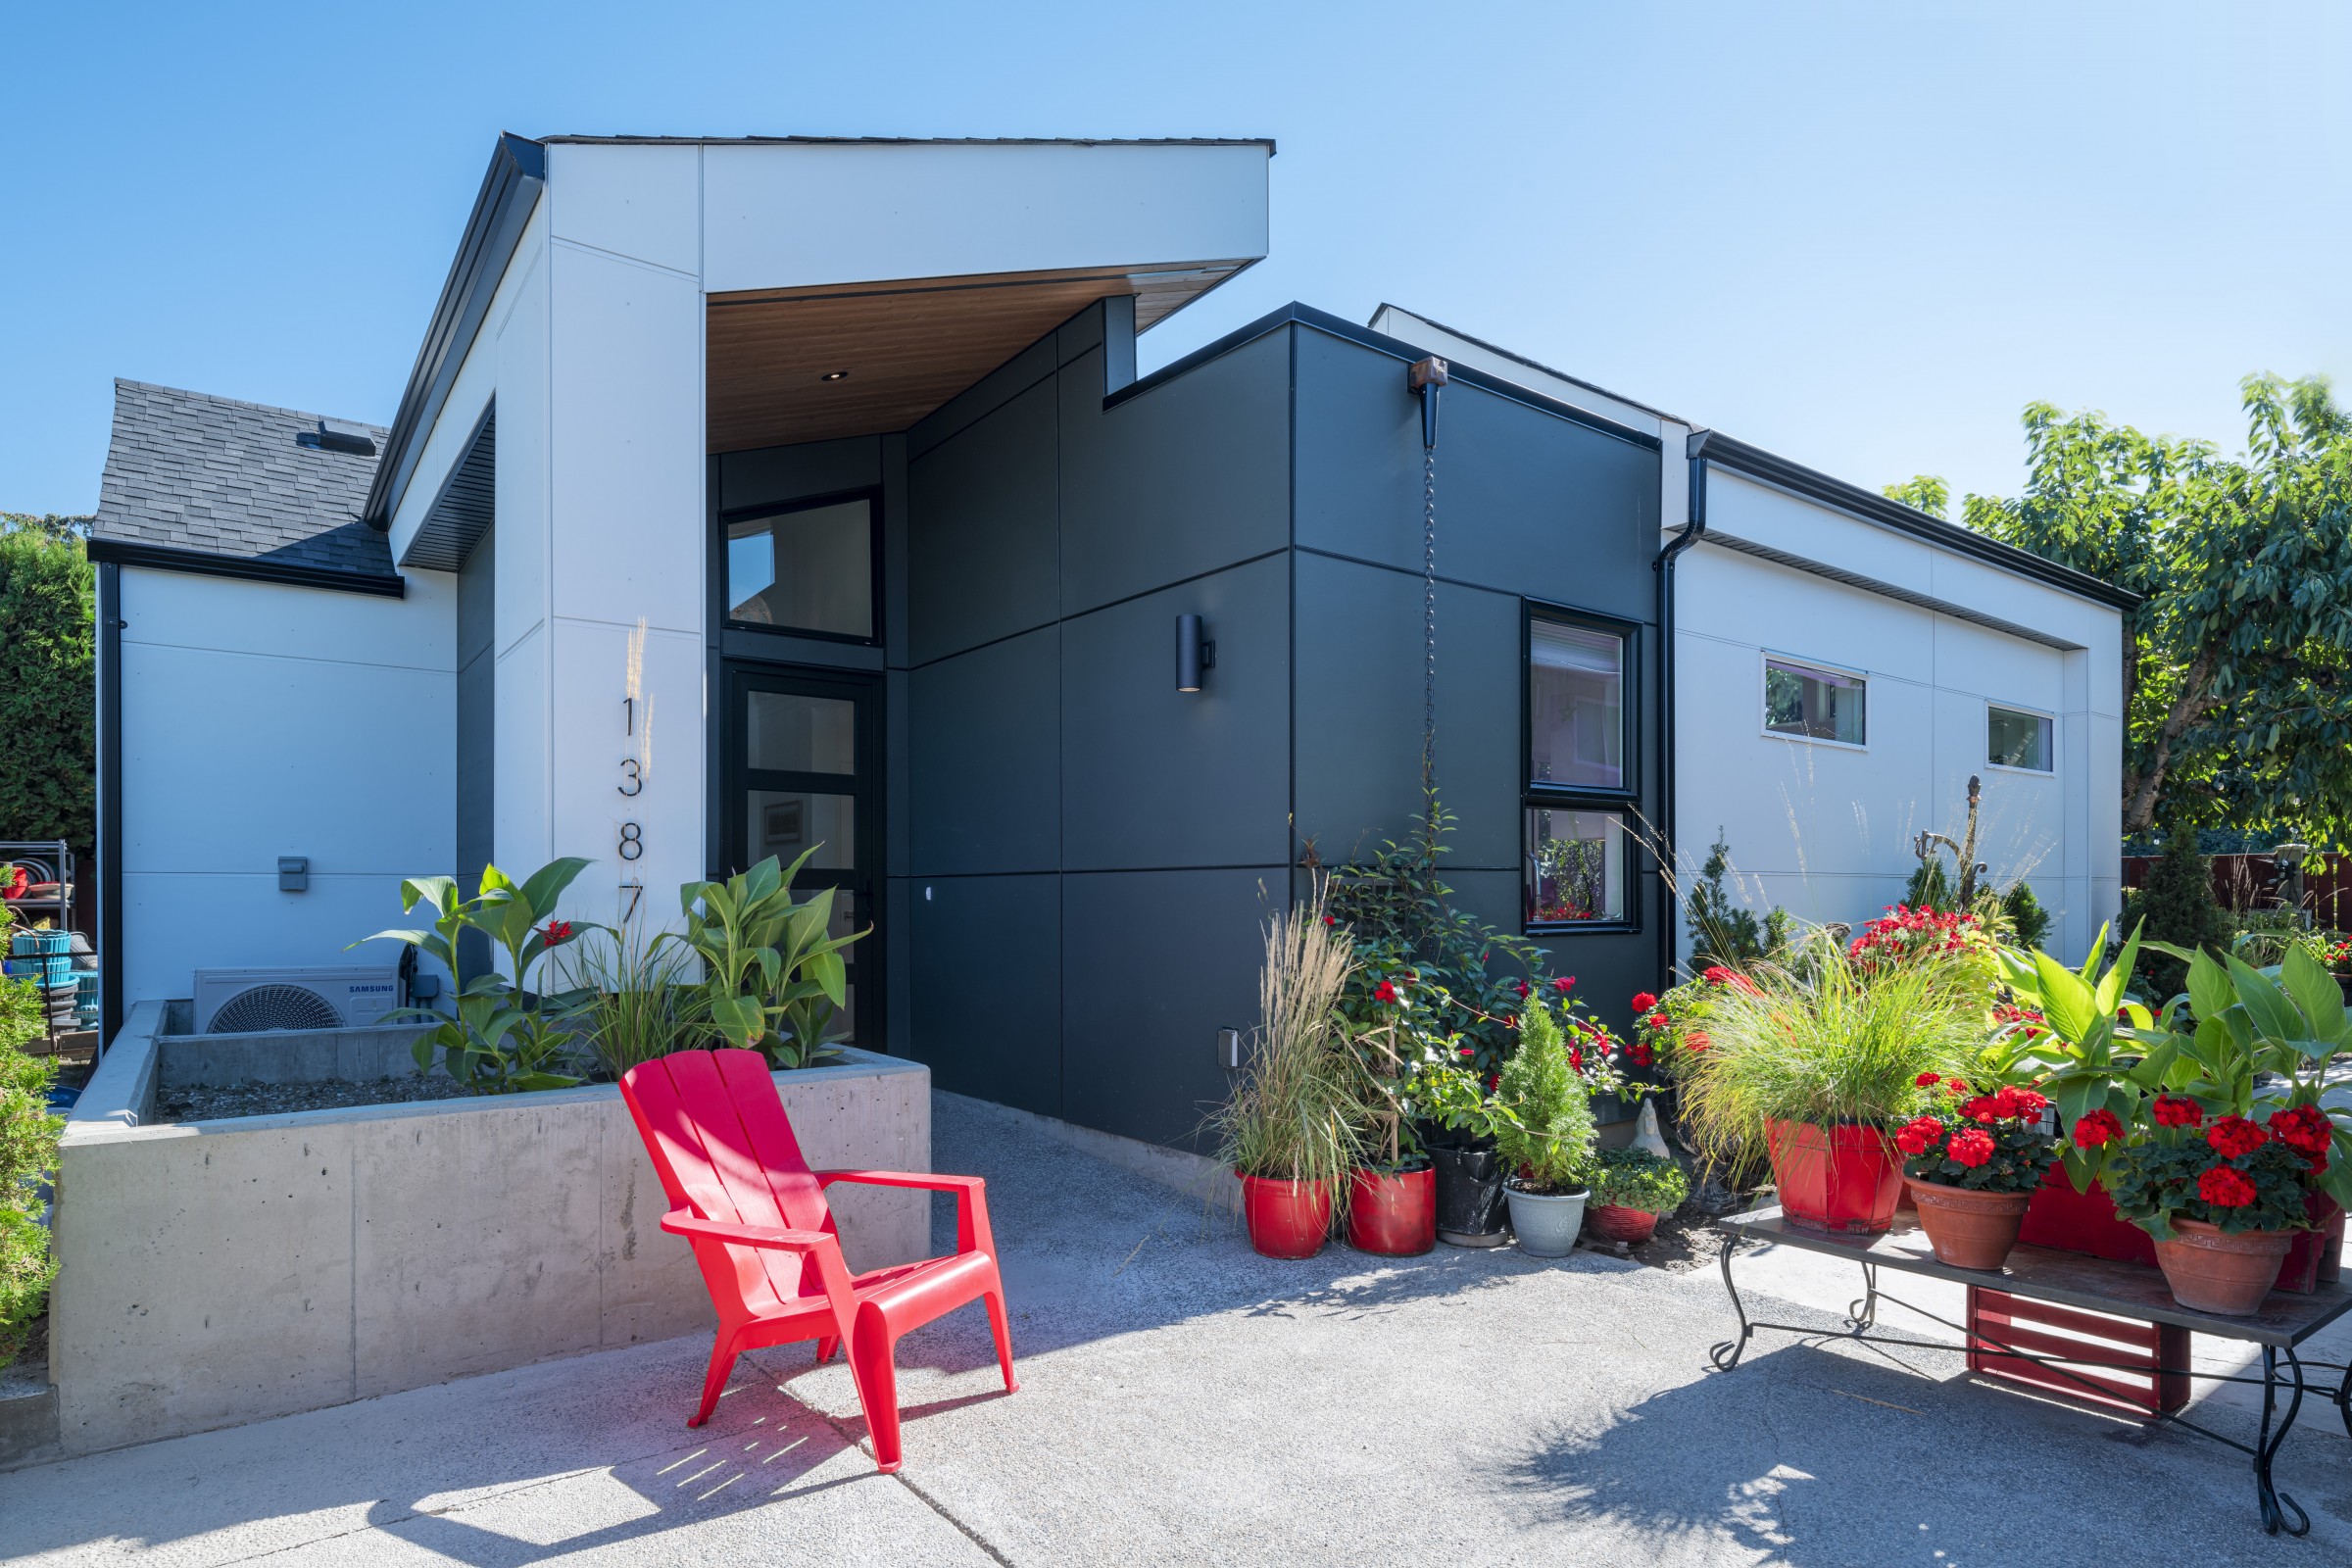 Ian Paine Construction and Design Cityside Garden Studio